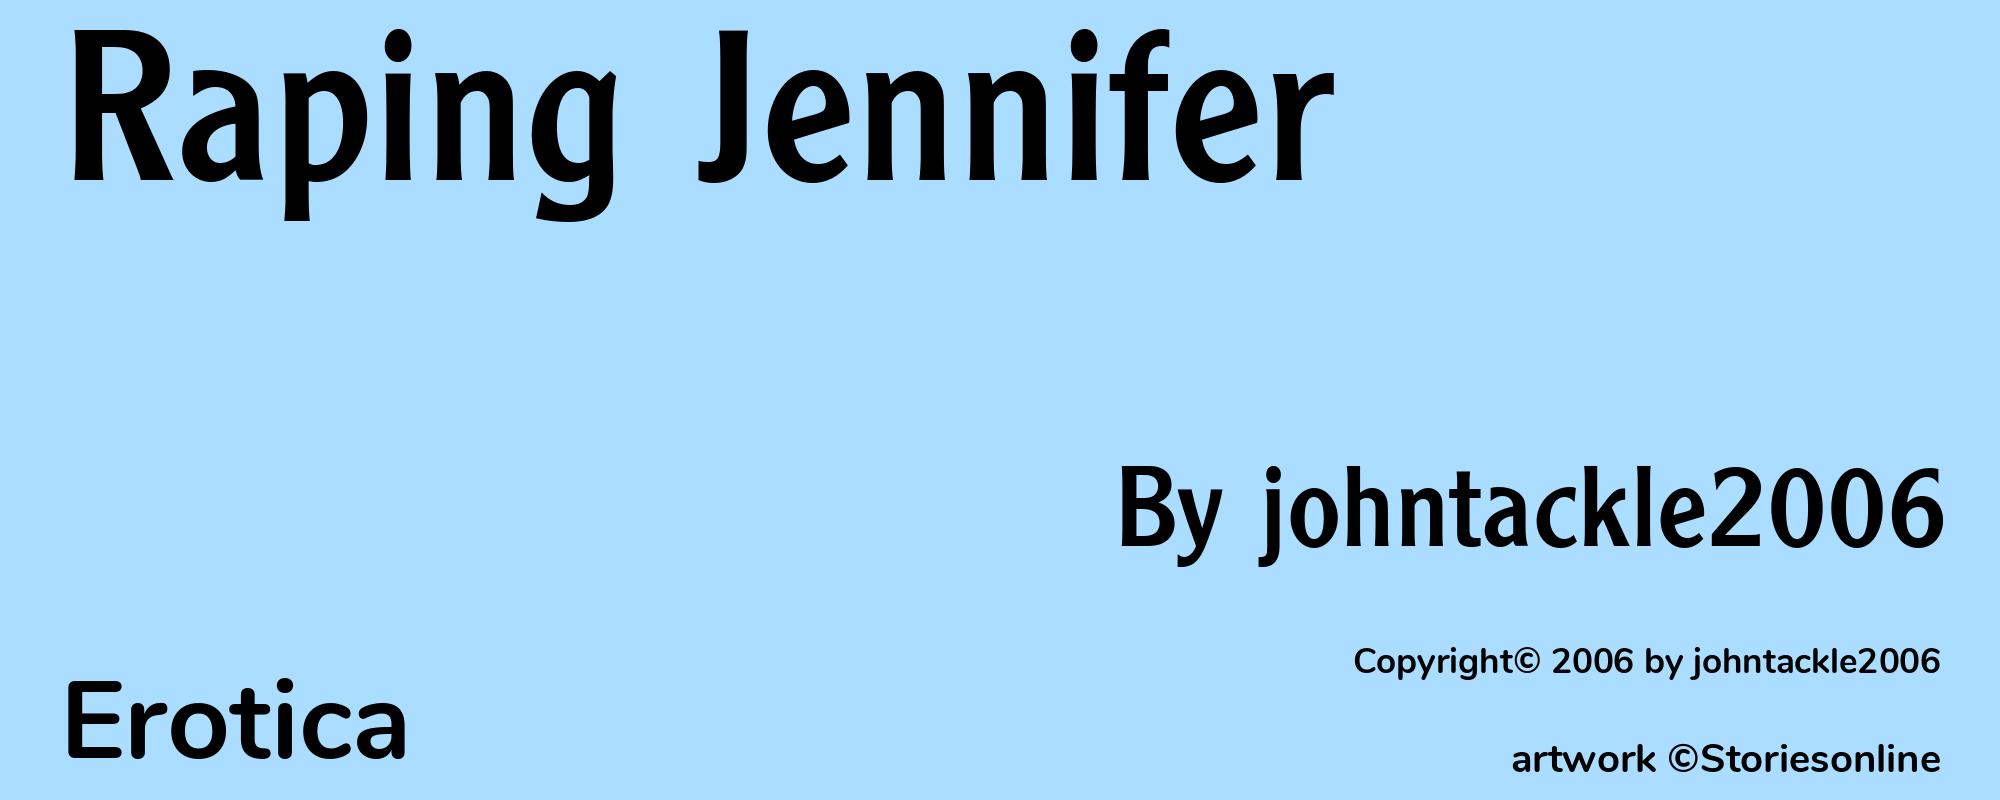 Raping Jennifer - Cover